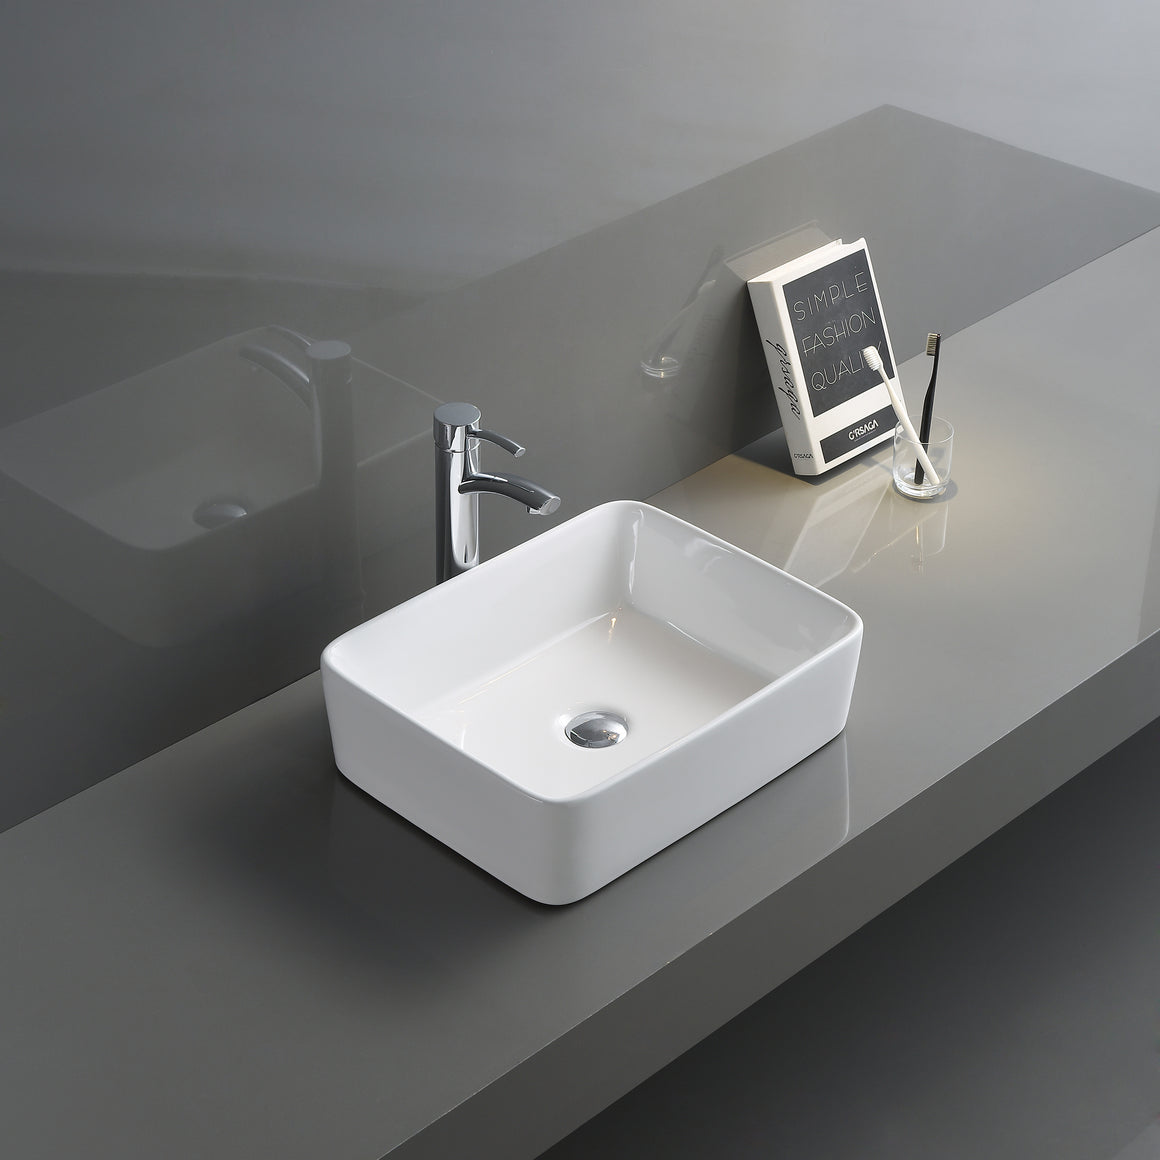 Ruvati 19 x 14 inch Bathroom Vessel Sink White Rectangular Above Vanity Counter Porcelain Ceramic